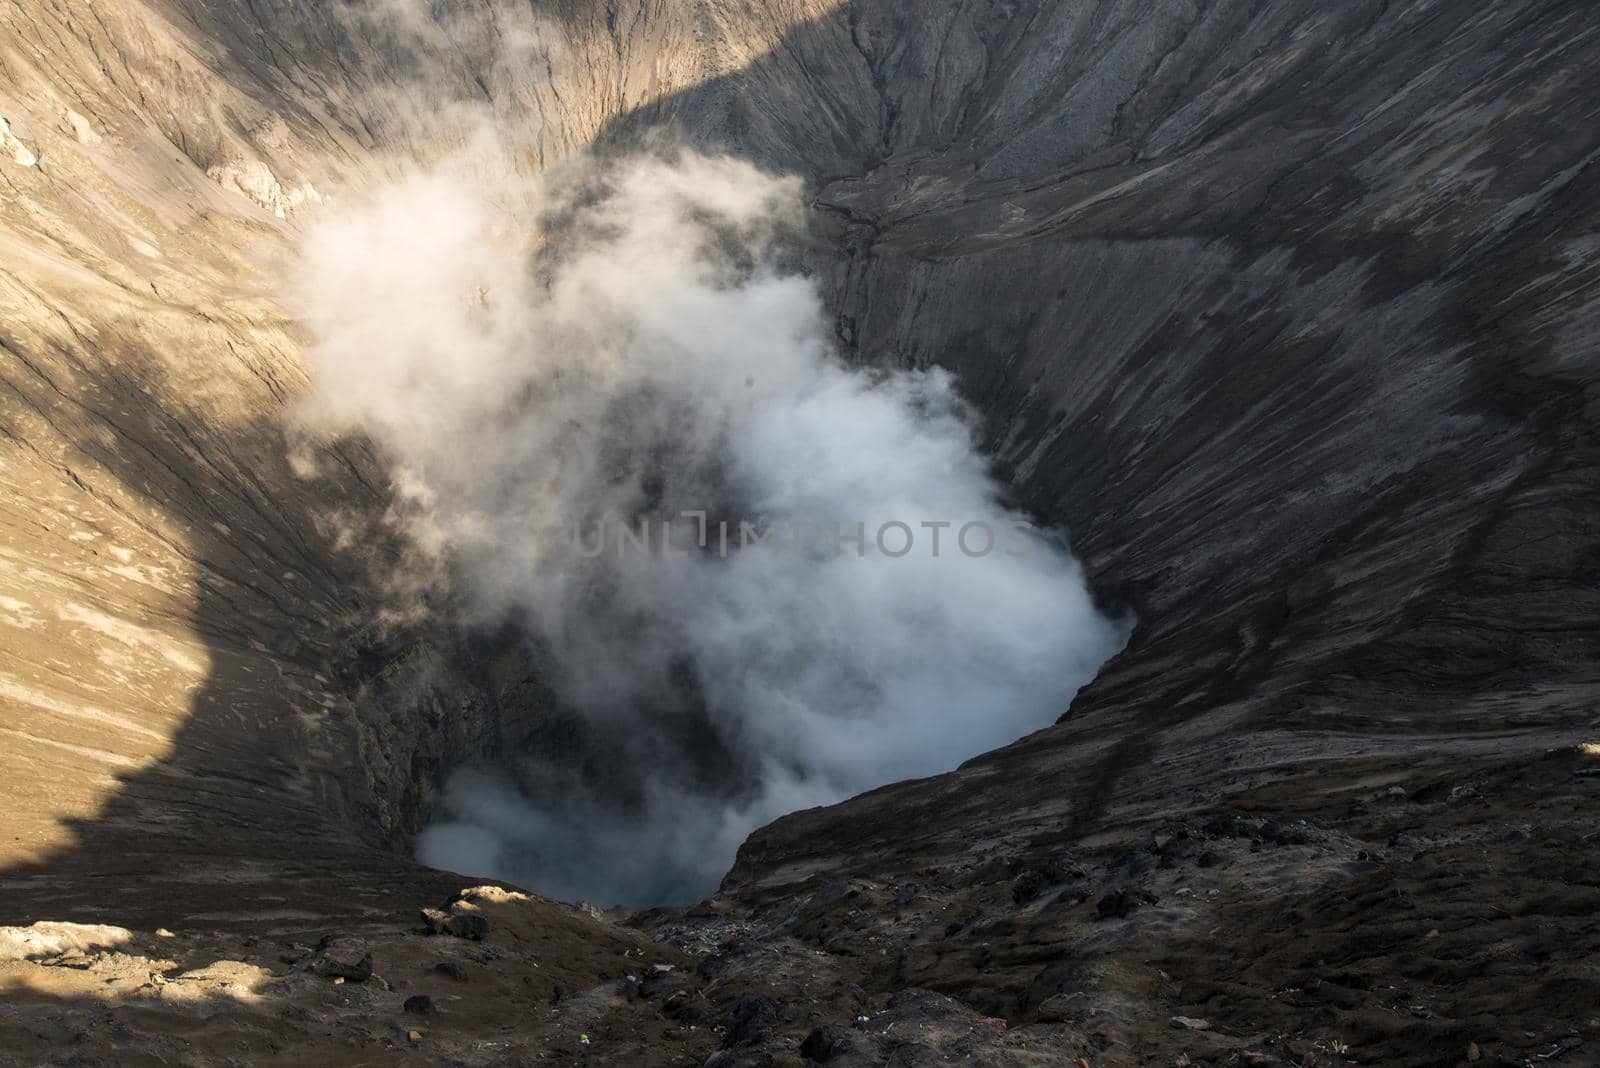 Mount Bromo volcanoes in Bromo Tengger Semeru National Park, East Java, Indonesia.

